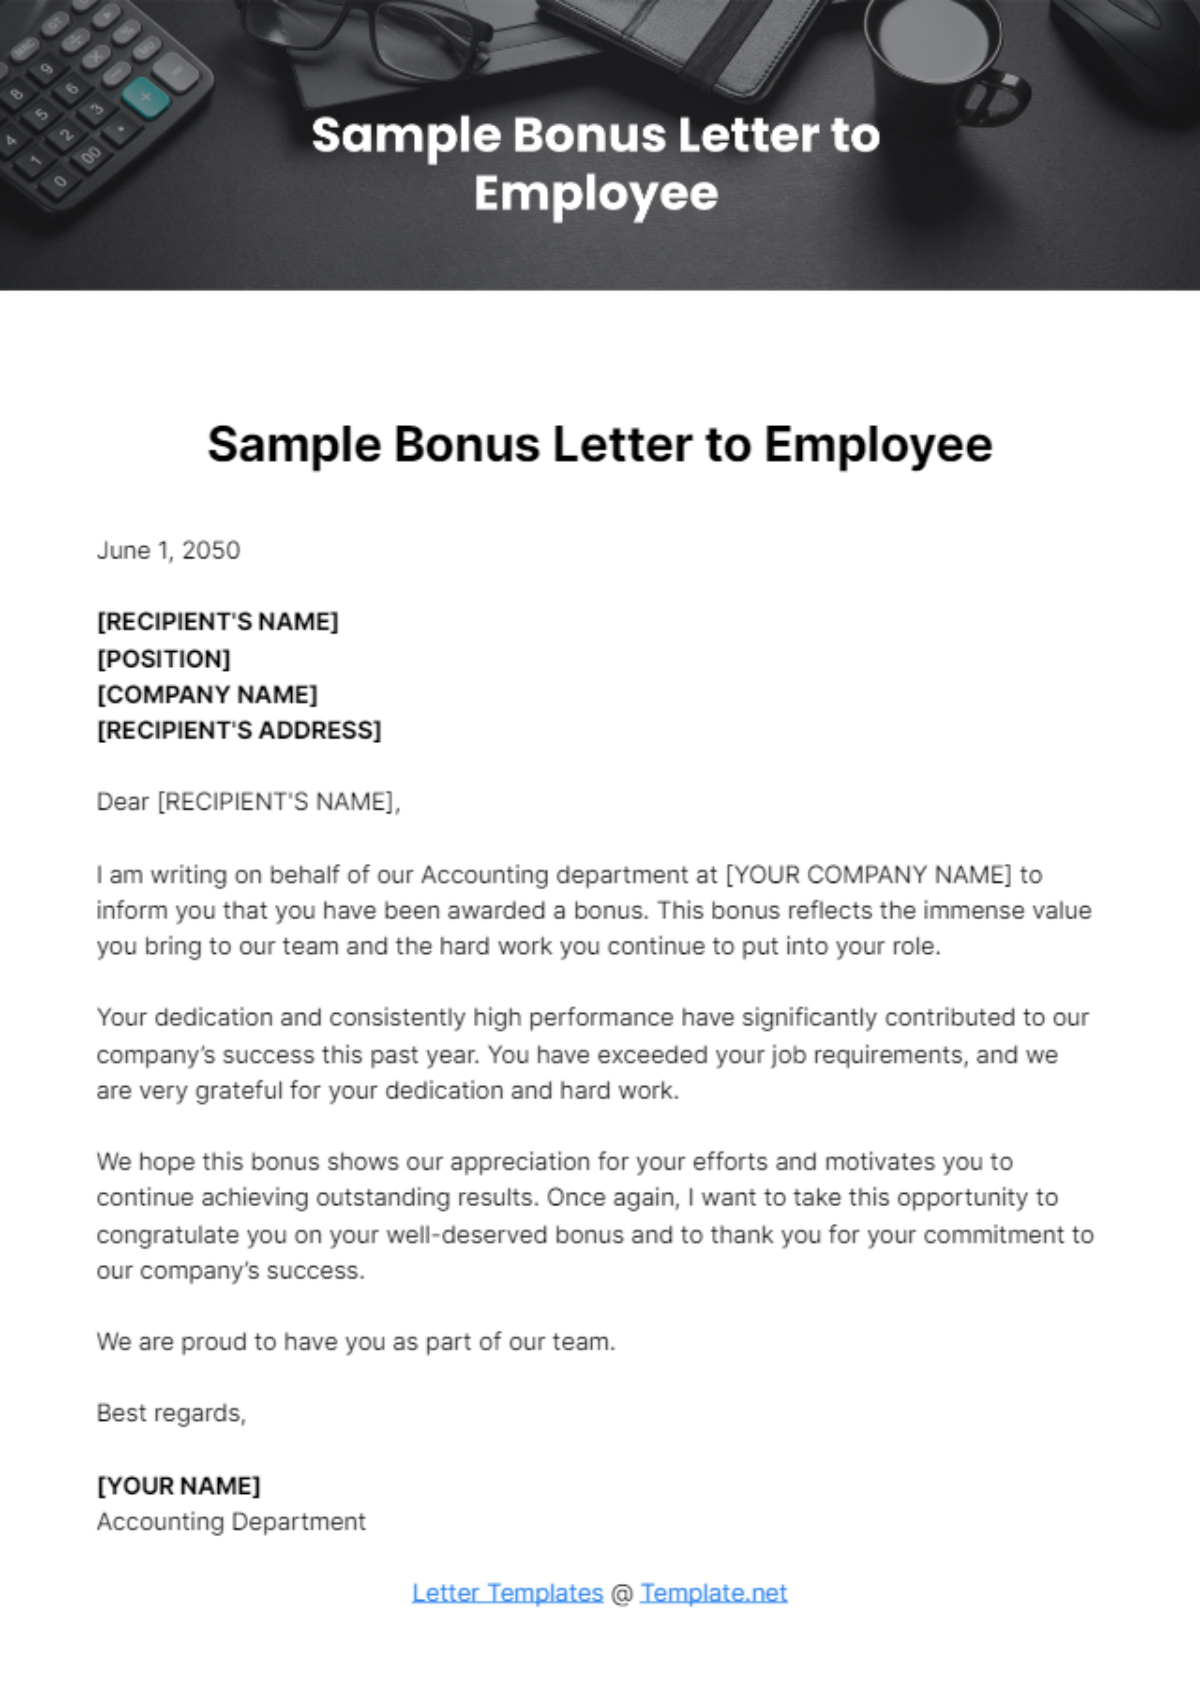 Free Sample Bonus Letter to Employee Template